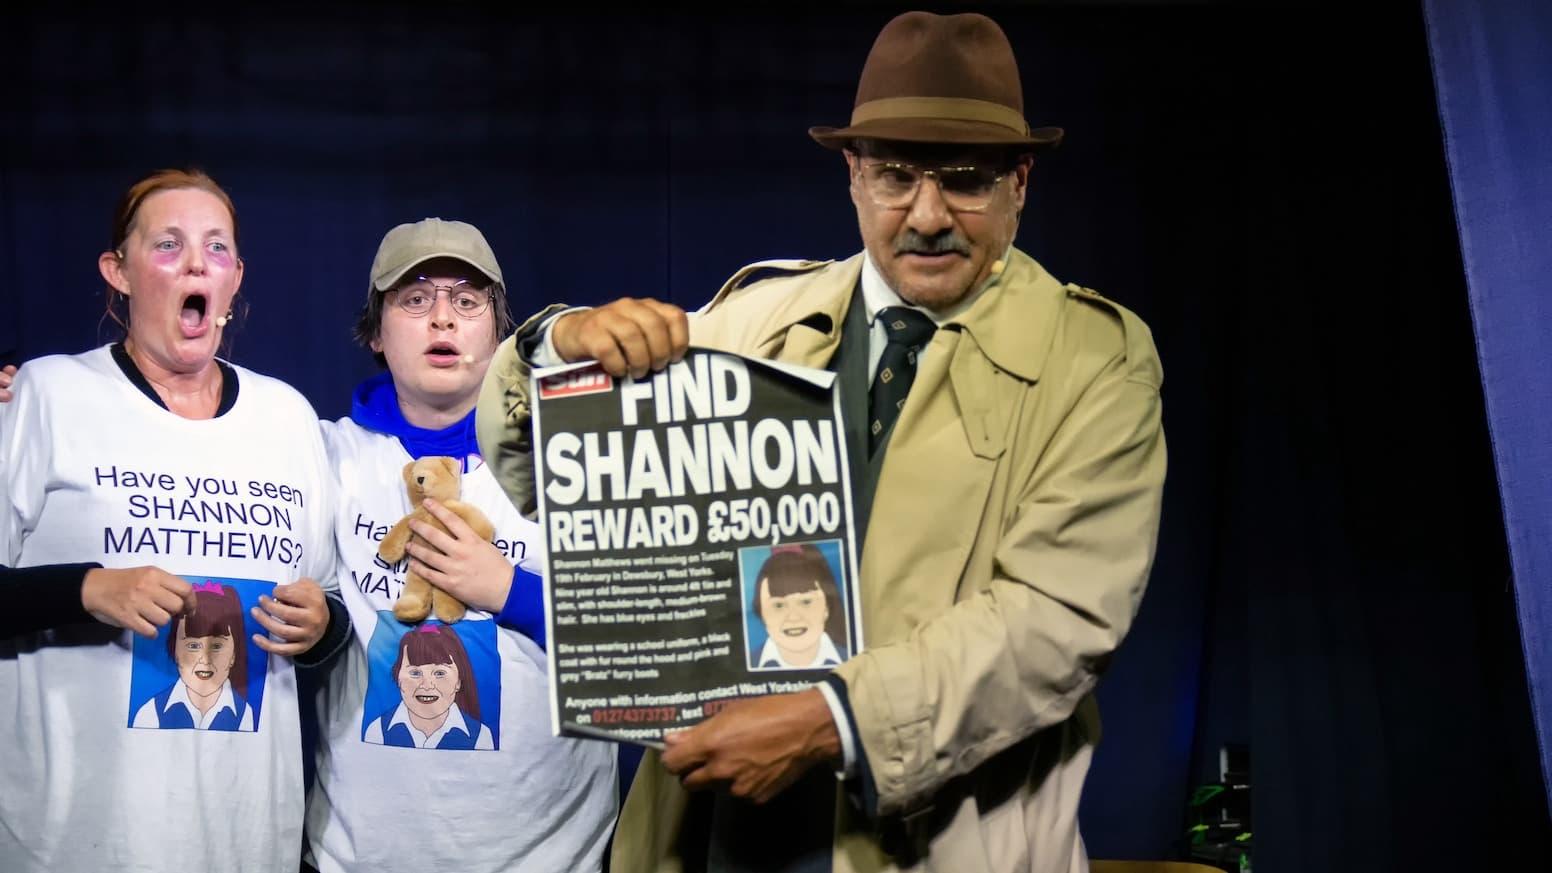 Shannon Matthews: The Musical - Live at Edinburgh Fringe backdrop